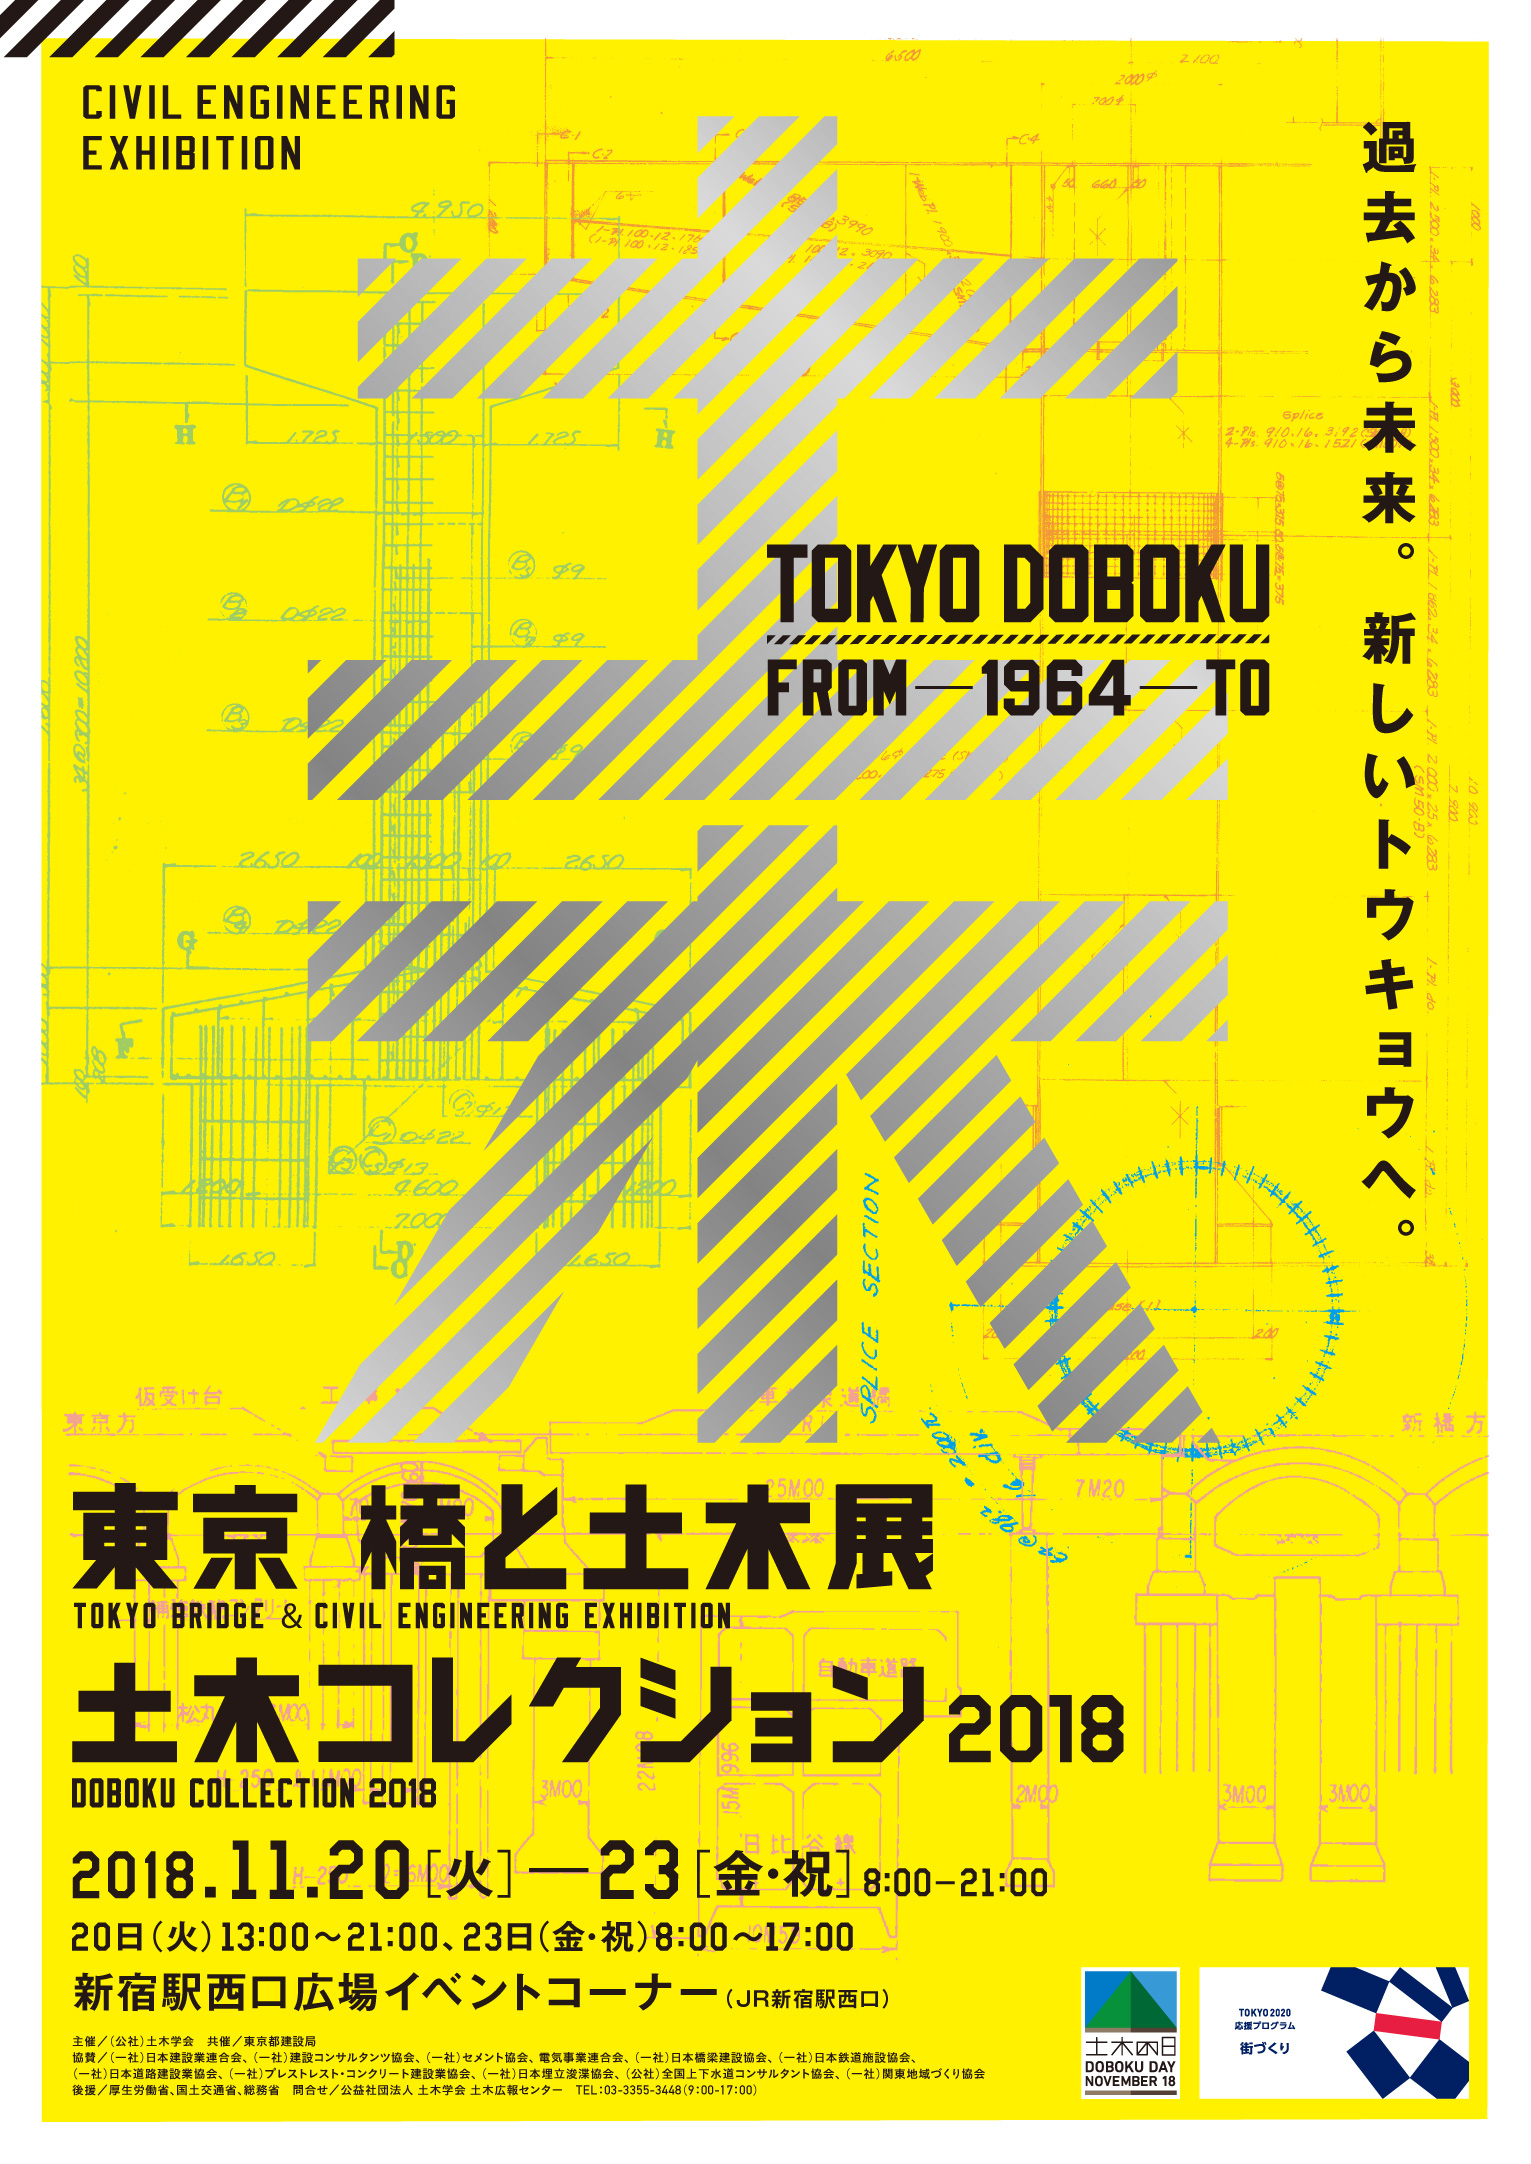 http://dobokore.jsce.or.jp/wp-content/uploads/2018/11/1101_2018dbc_poster.jpg